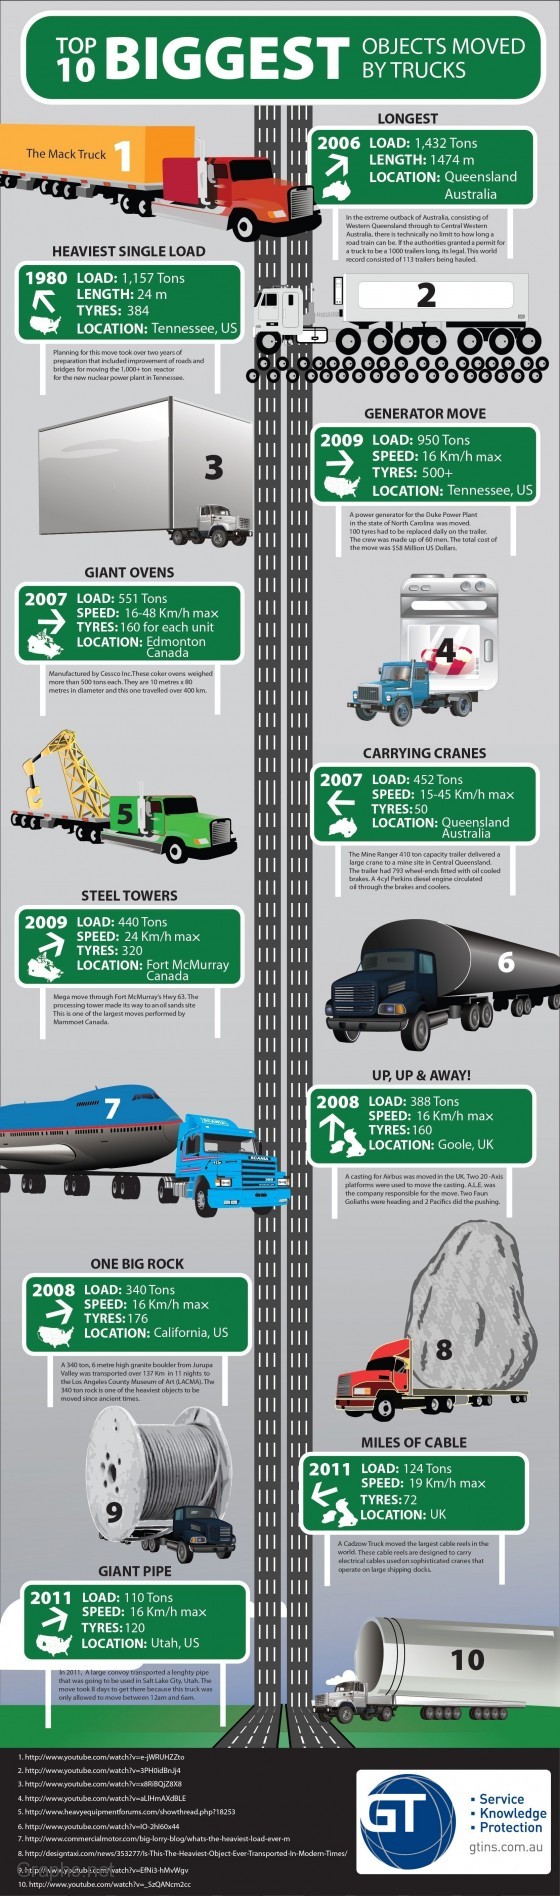 Top 10 Heaviest Objects Moved in Trucks